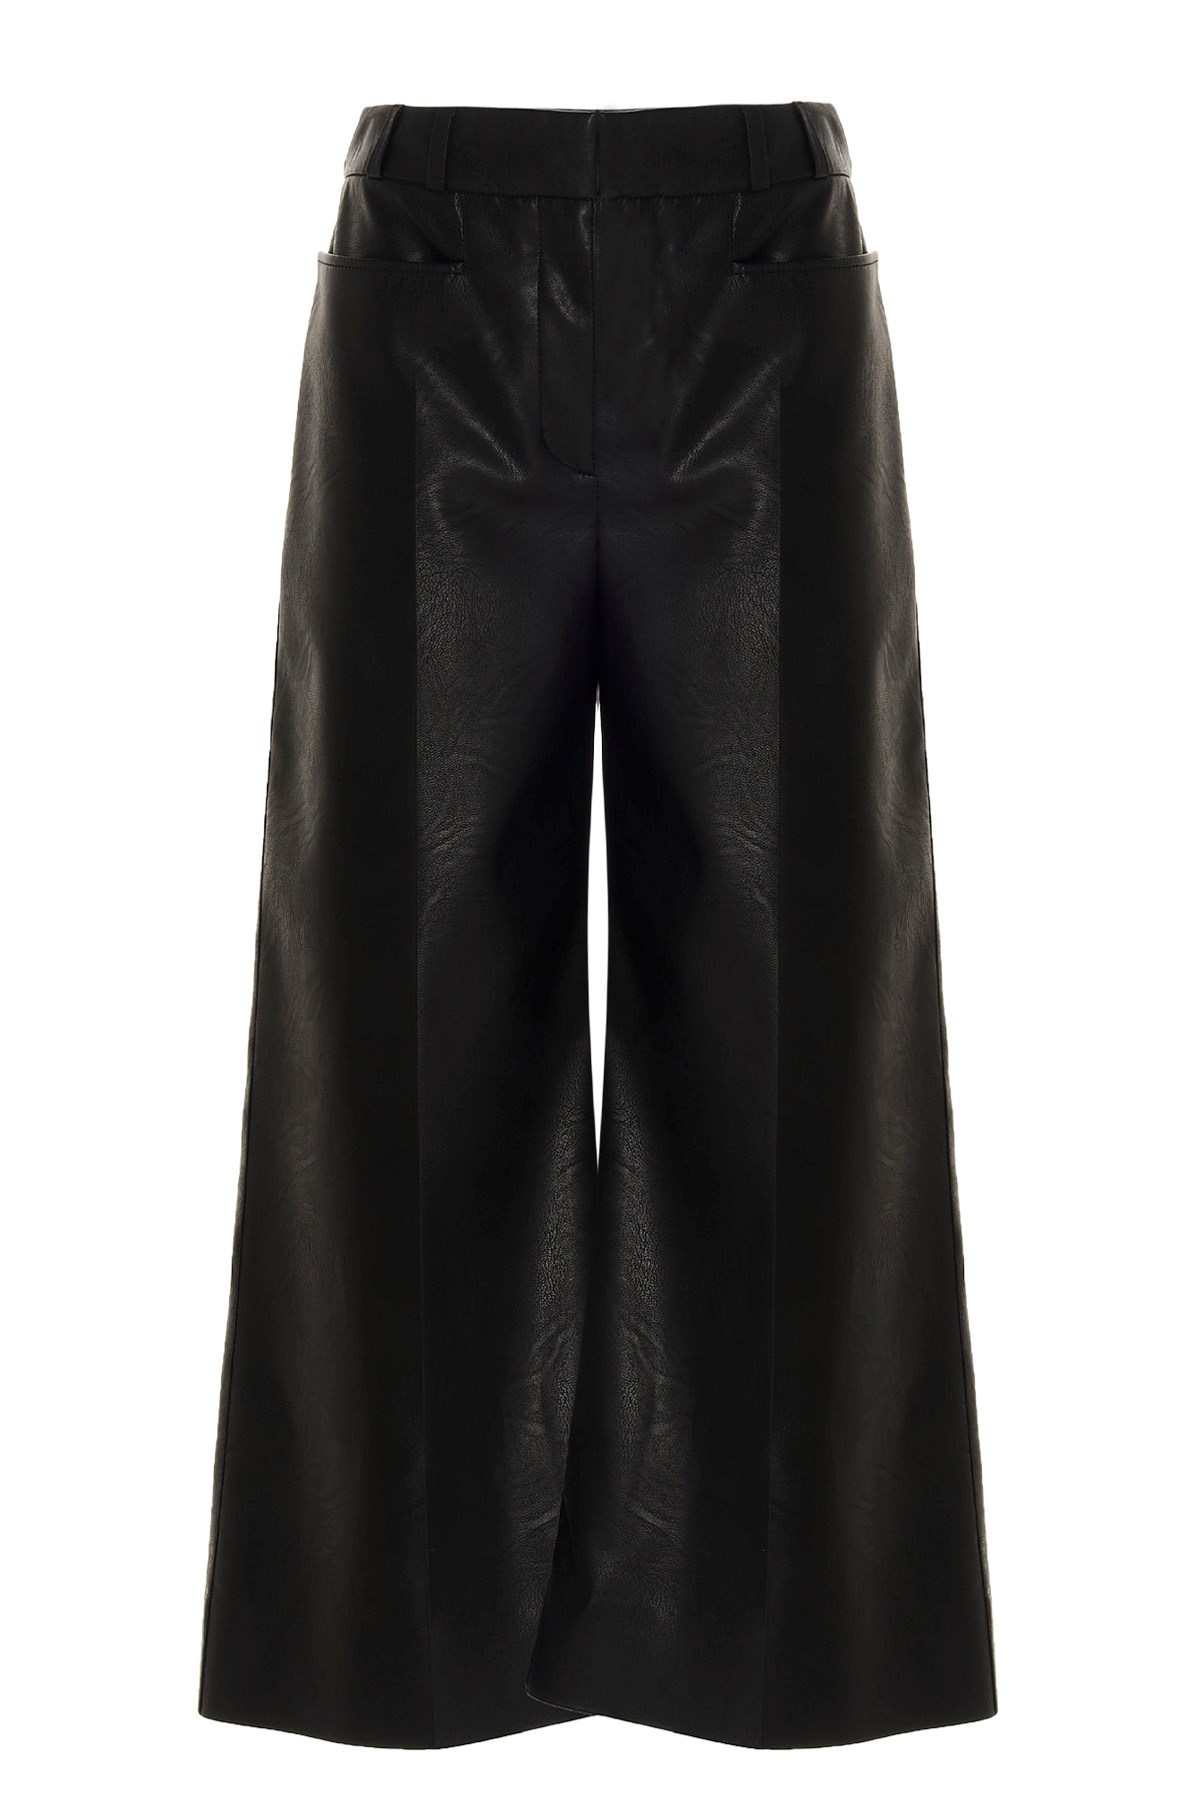 STELLA MCCARTNEY 'Charlotte' Eco Leather Pants